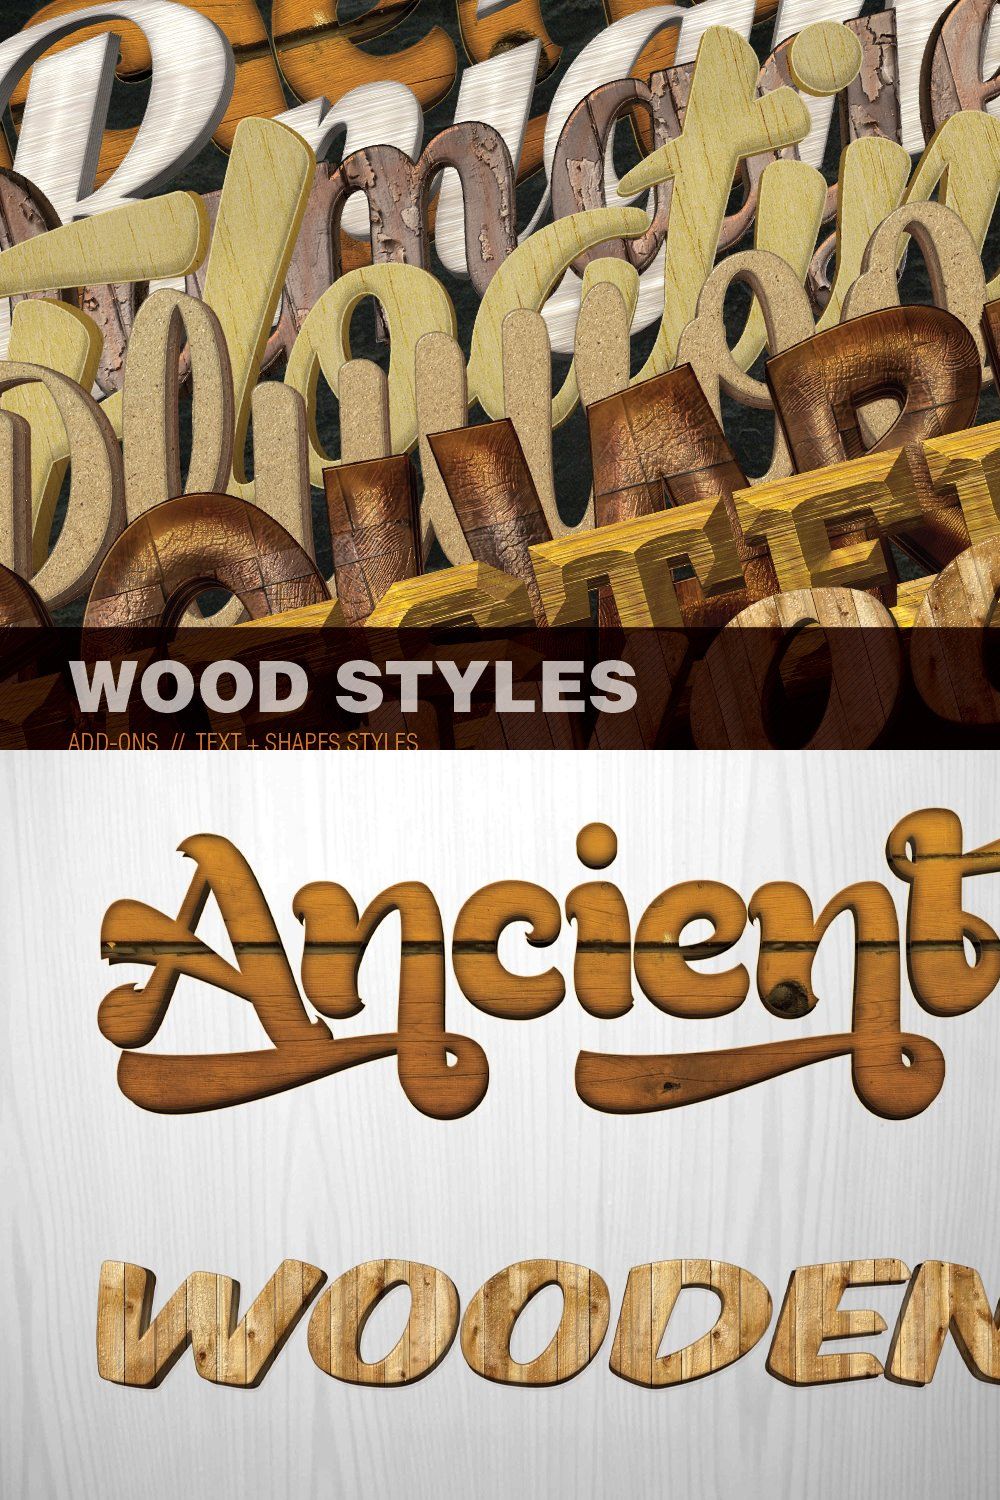 Magik Wood Styles pinterest preview image.